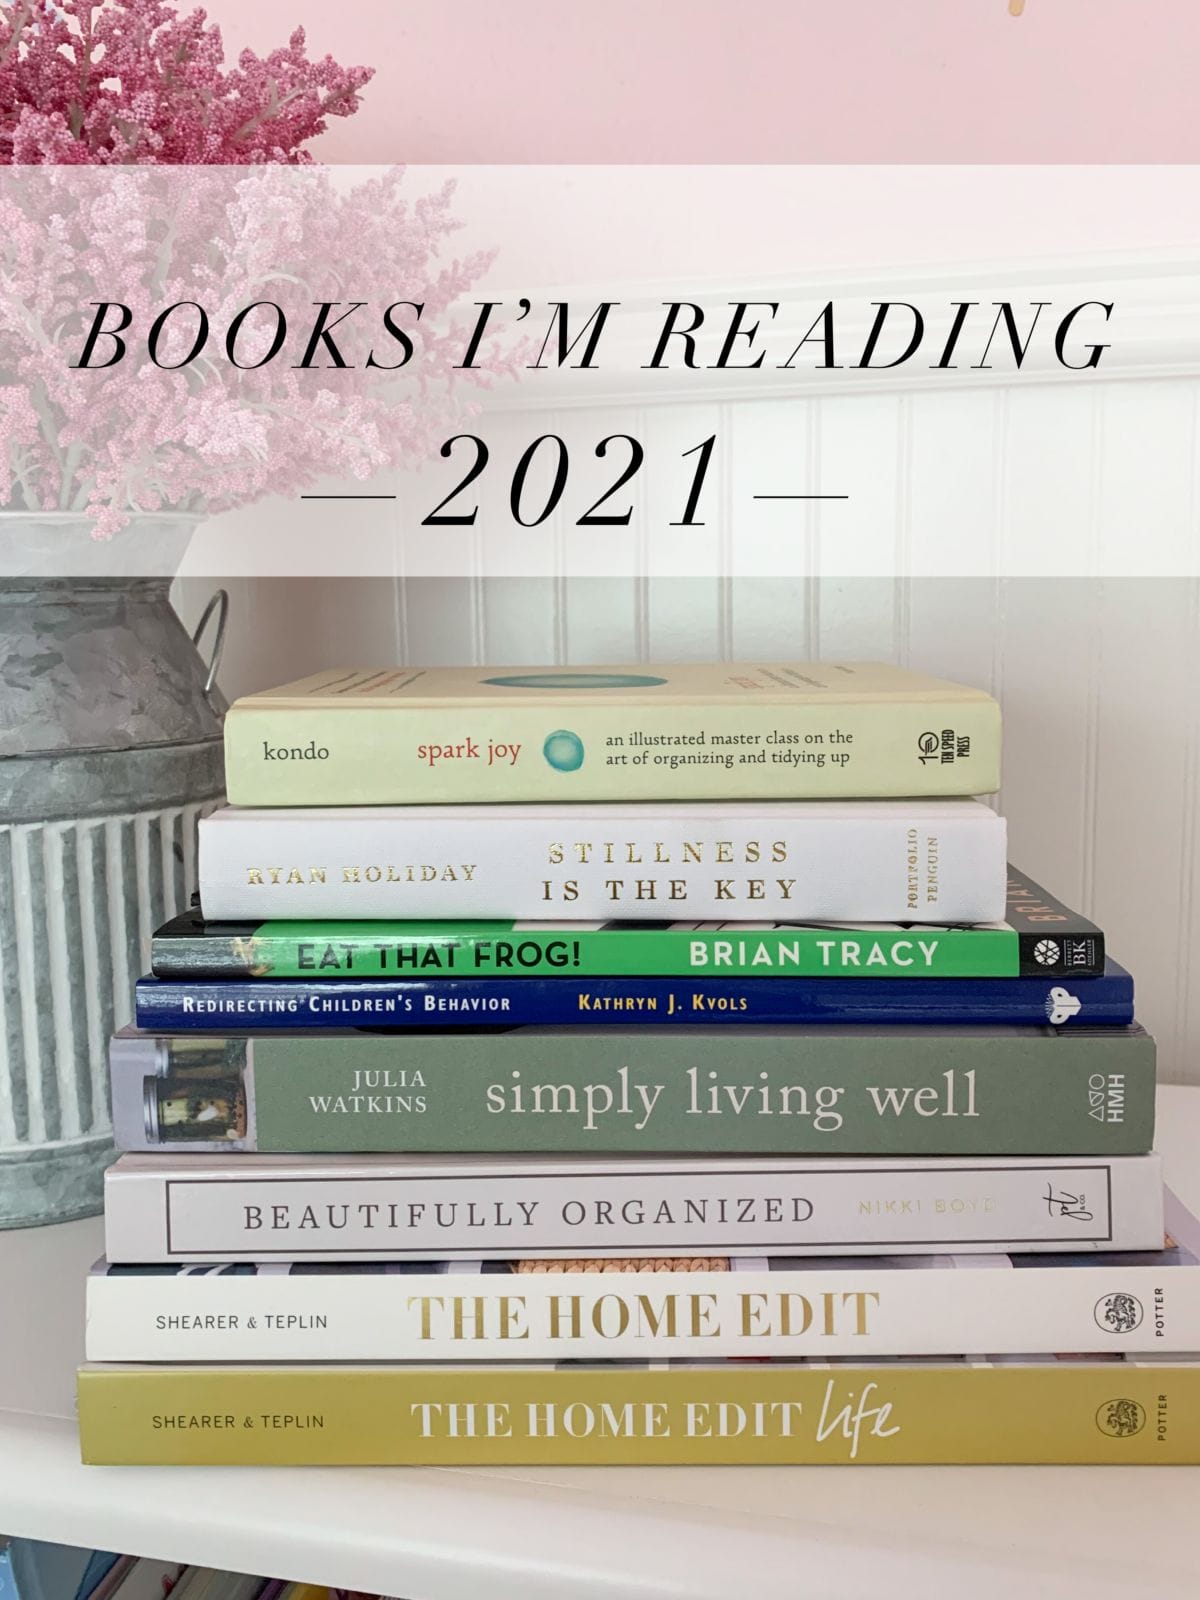 Books I'm Reading in 2021